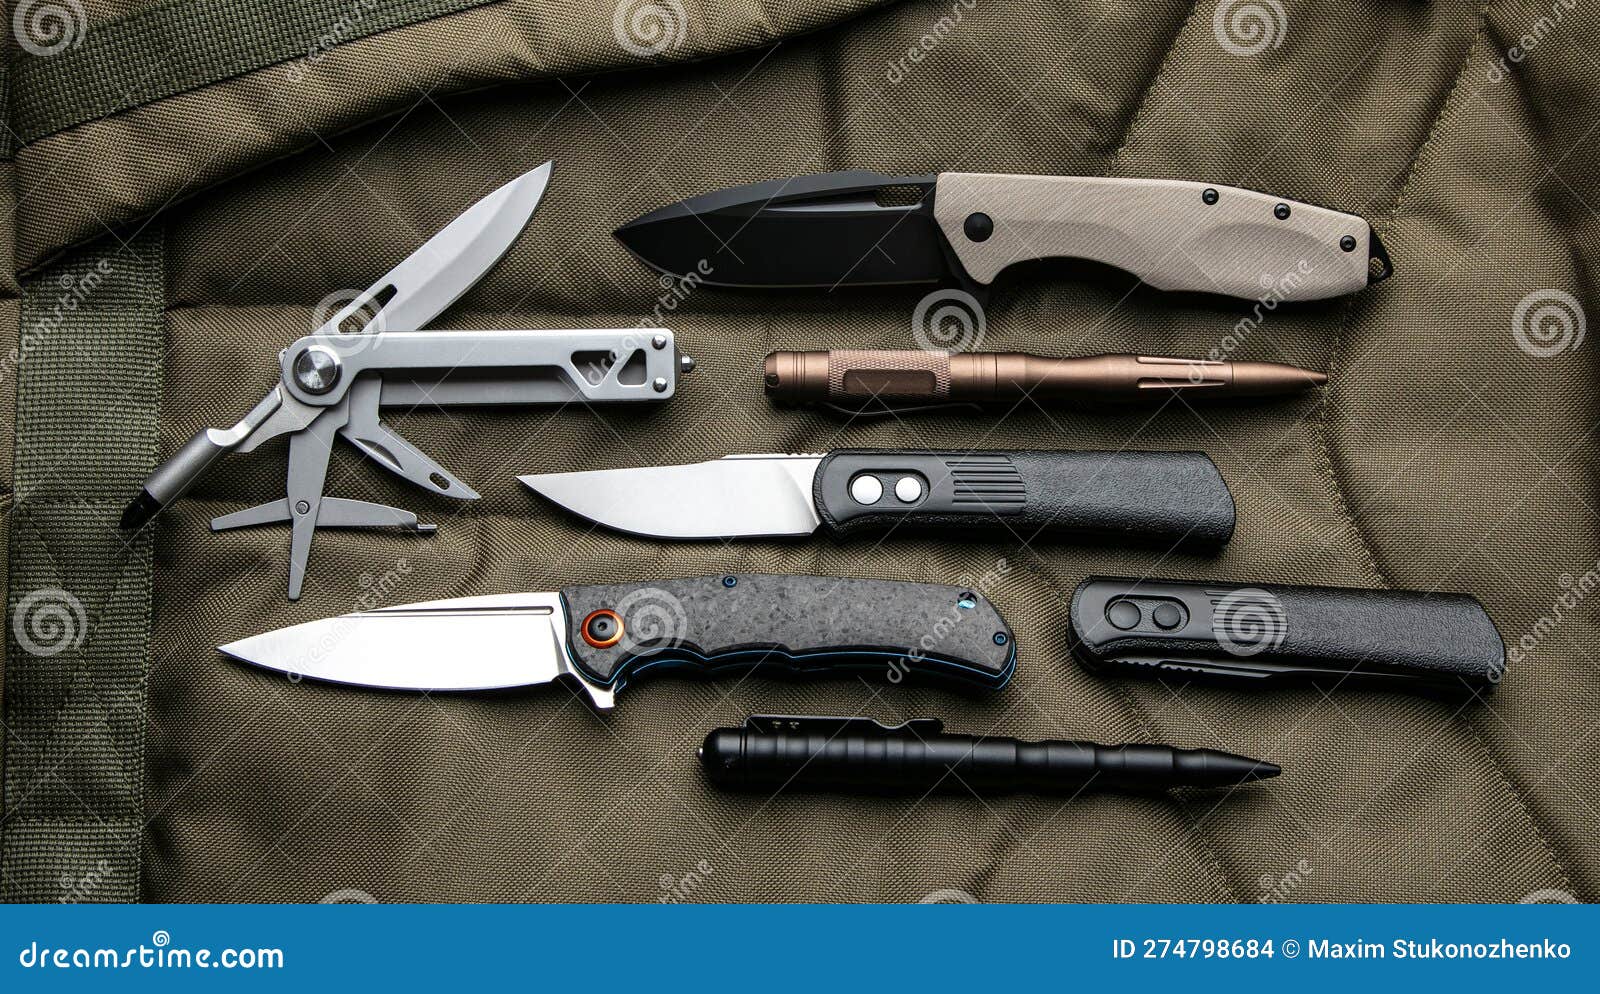 https://thumbs.dreamstime.com/z/penknives-multi-tools-tactical-pens-folding-pocket-knives-khaki-back-background-274798684.jpg